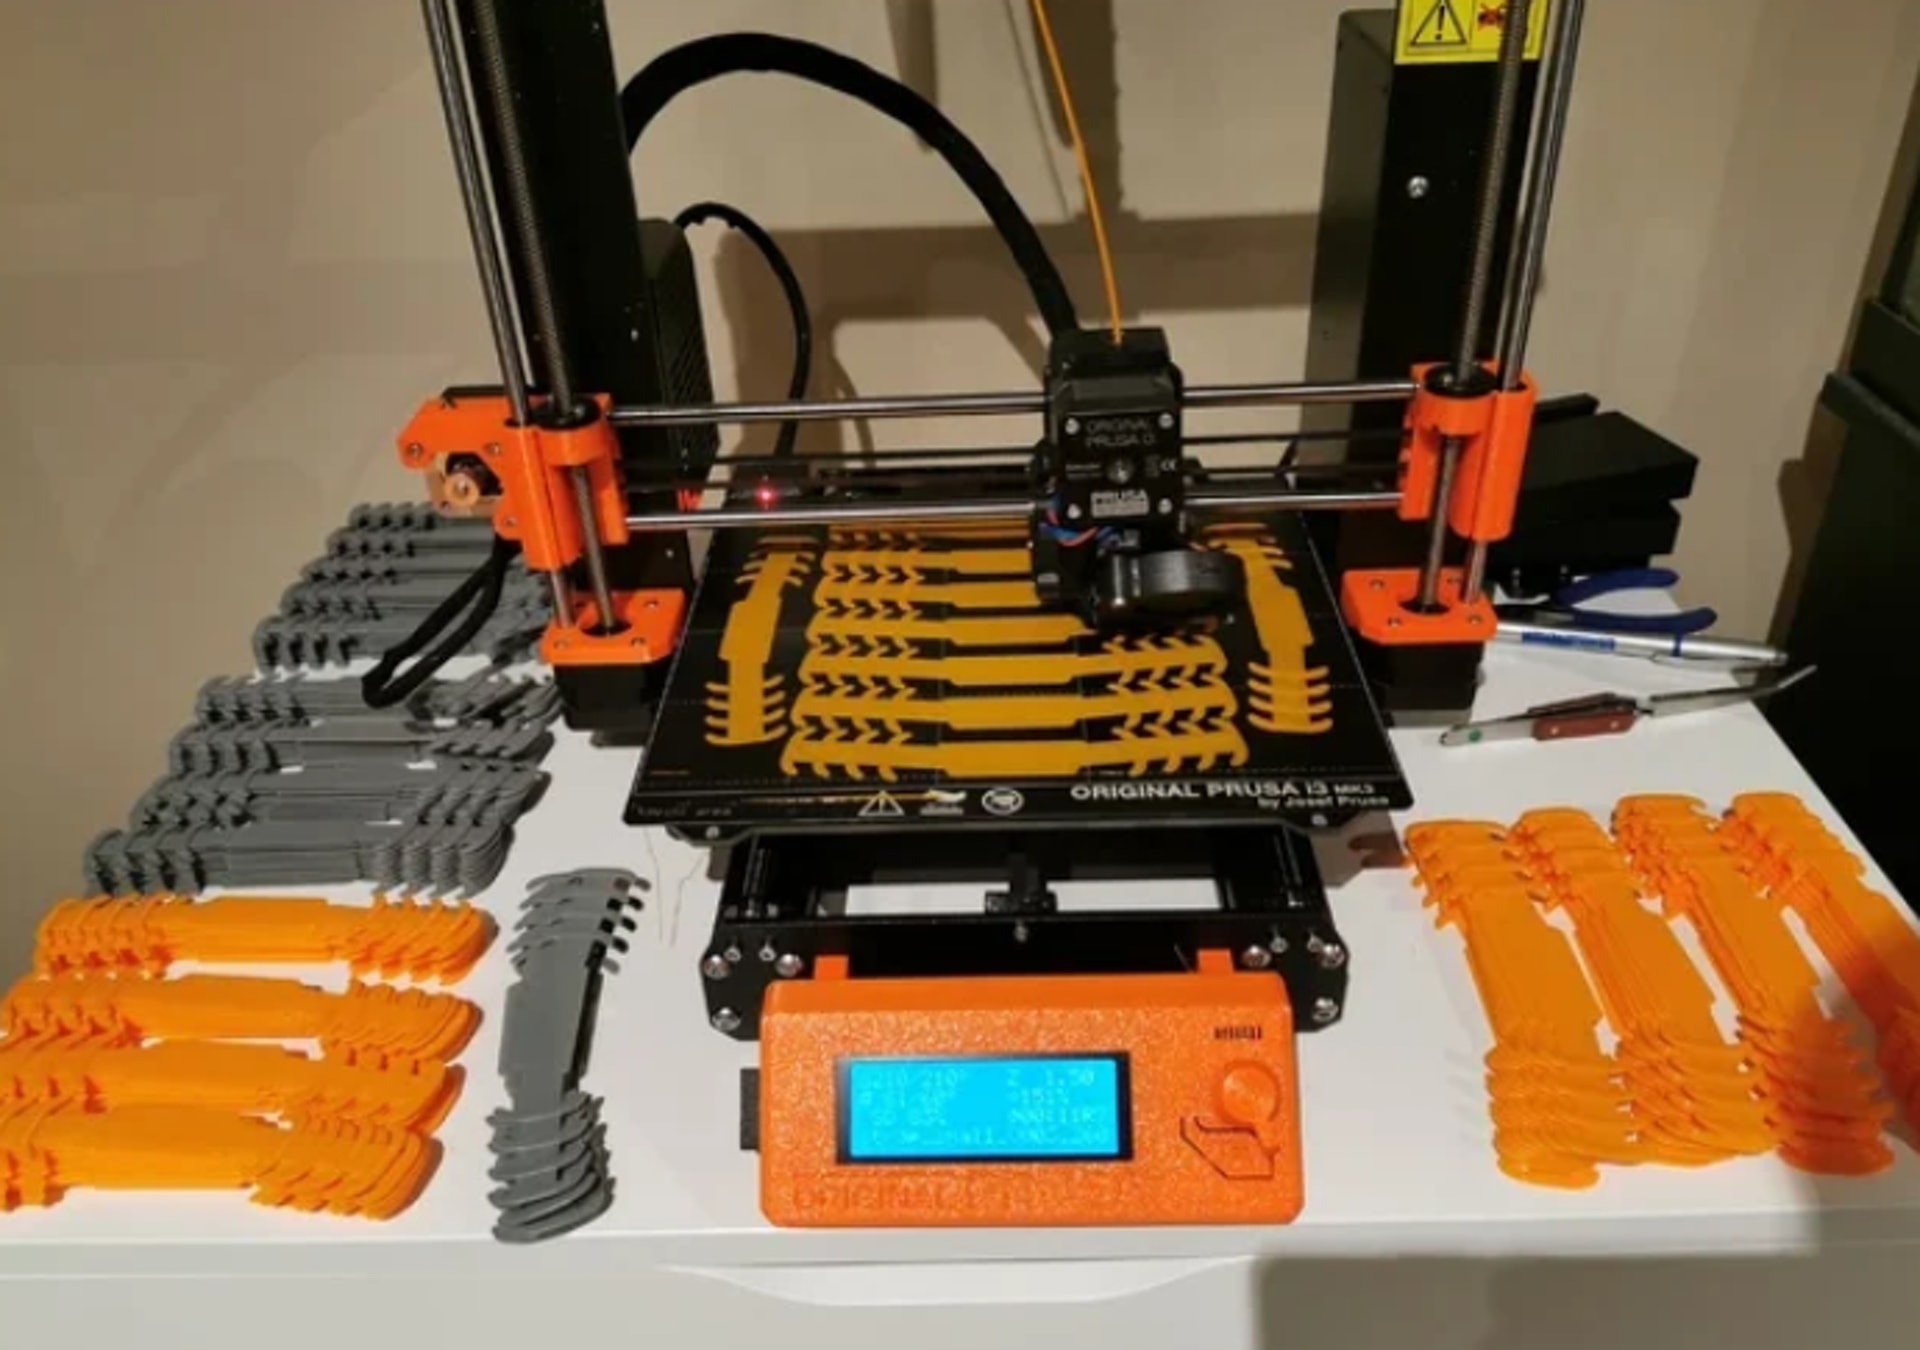 Quinn大方分享設計圖，呼籲有3D打印機的人一同製作膠條供有需要醫護使用。（thingiverse網頁圖片）